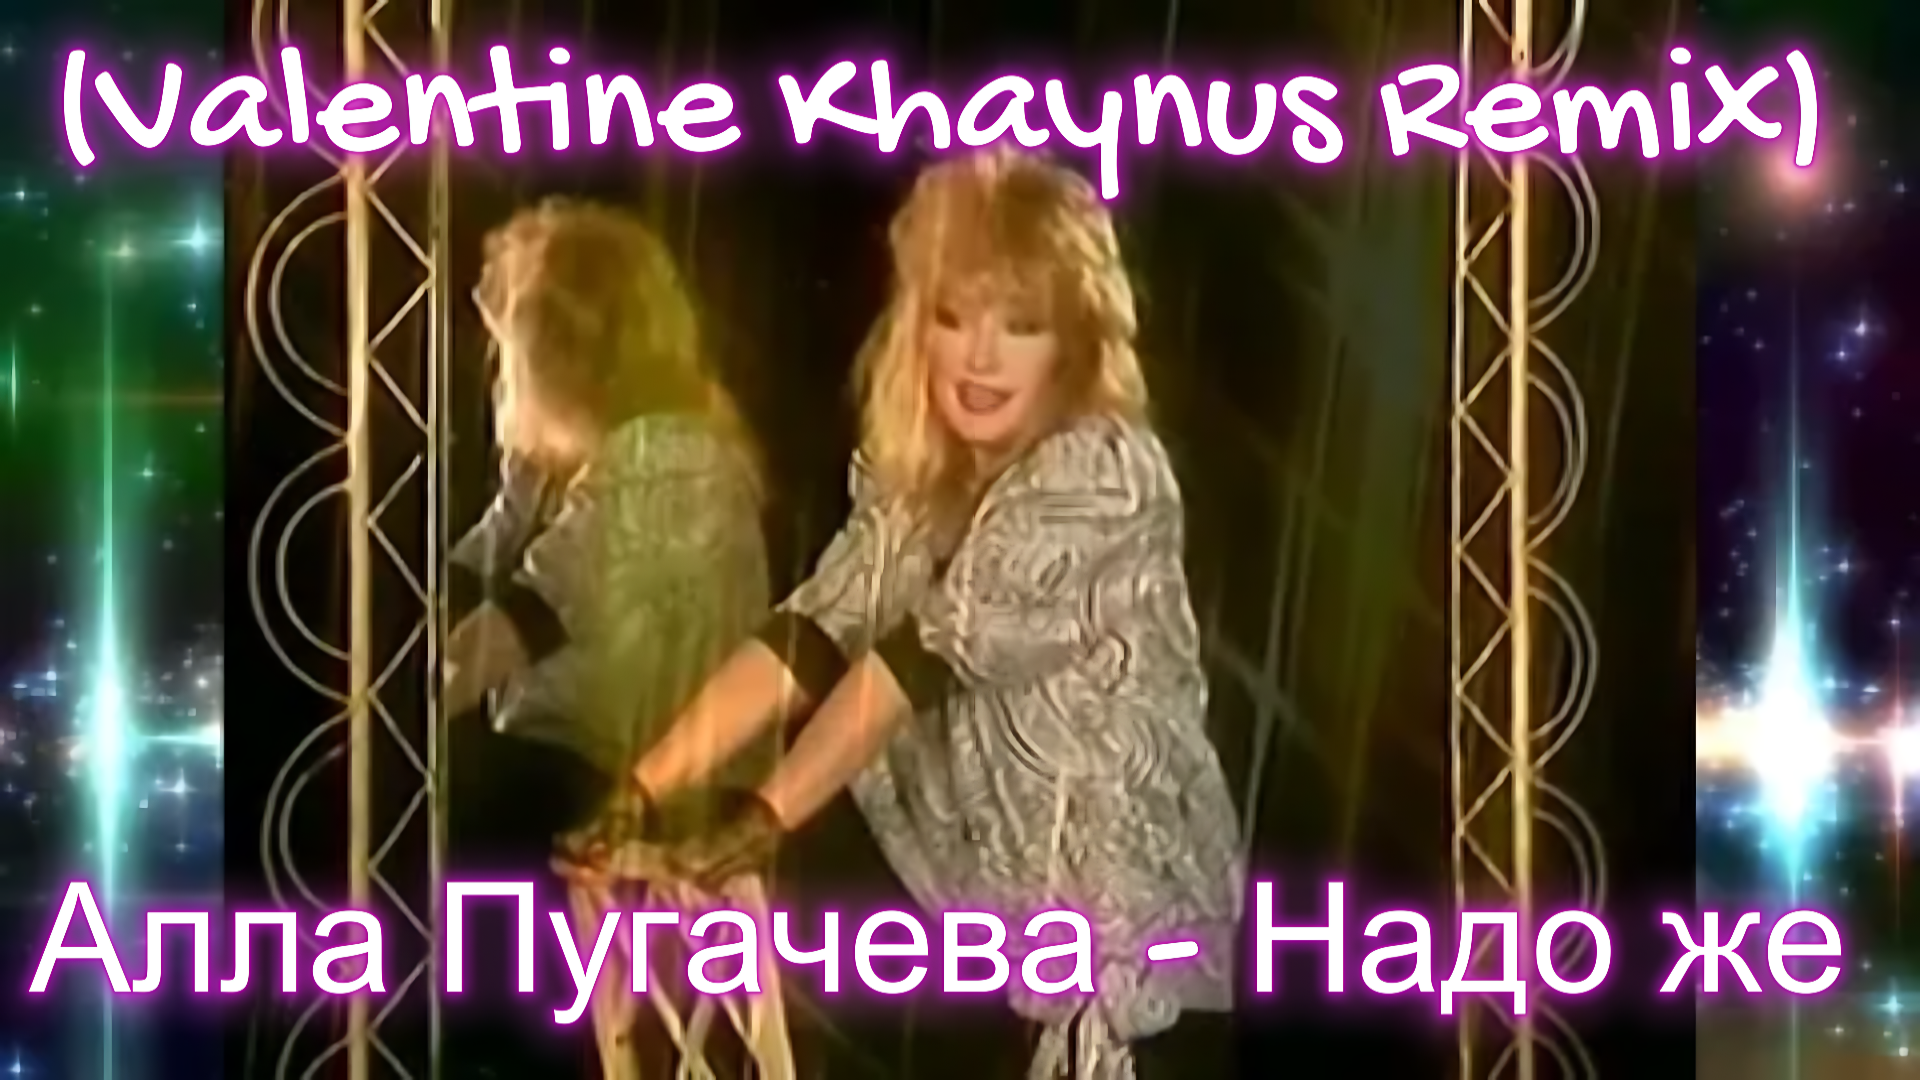 Алла Пугачева - Надо же (Valentine Khaynus Remix) (Ultra HD 4K)